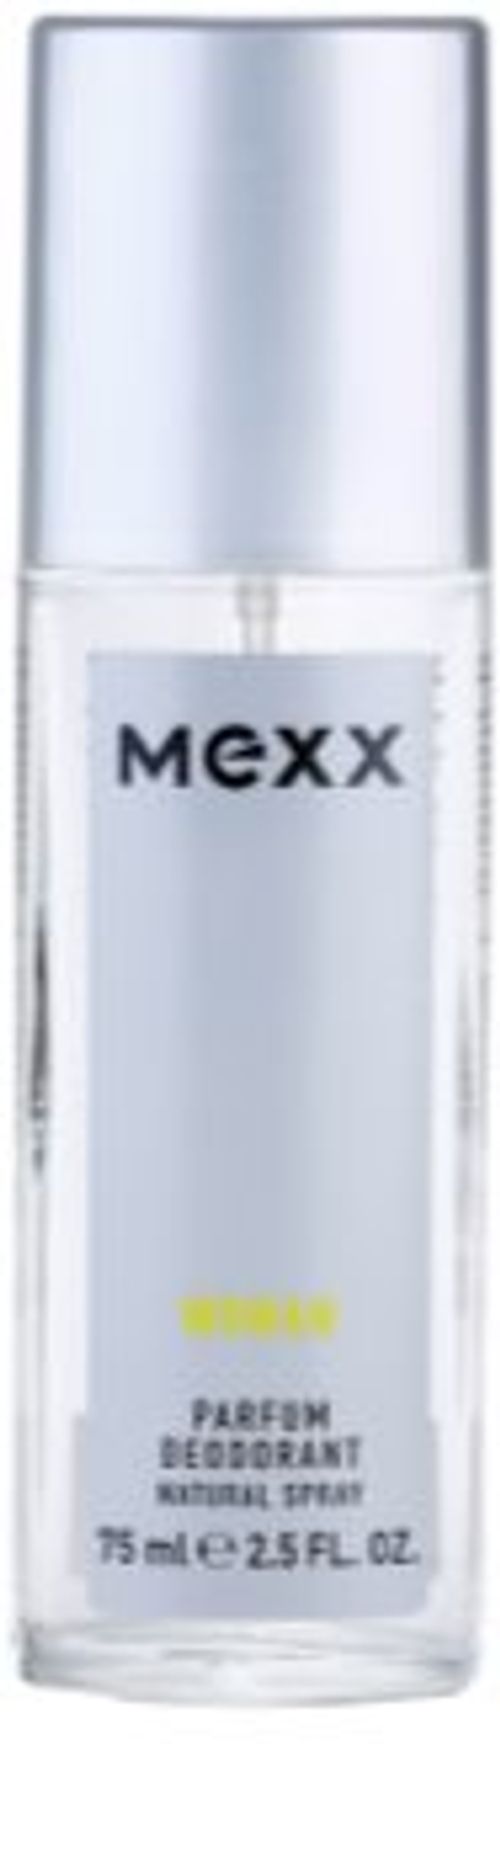 Mexx Woman Perfume Deodorant for Women 75 ml